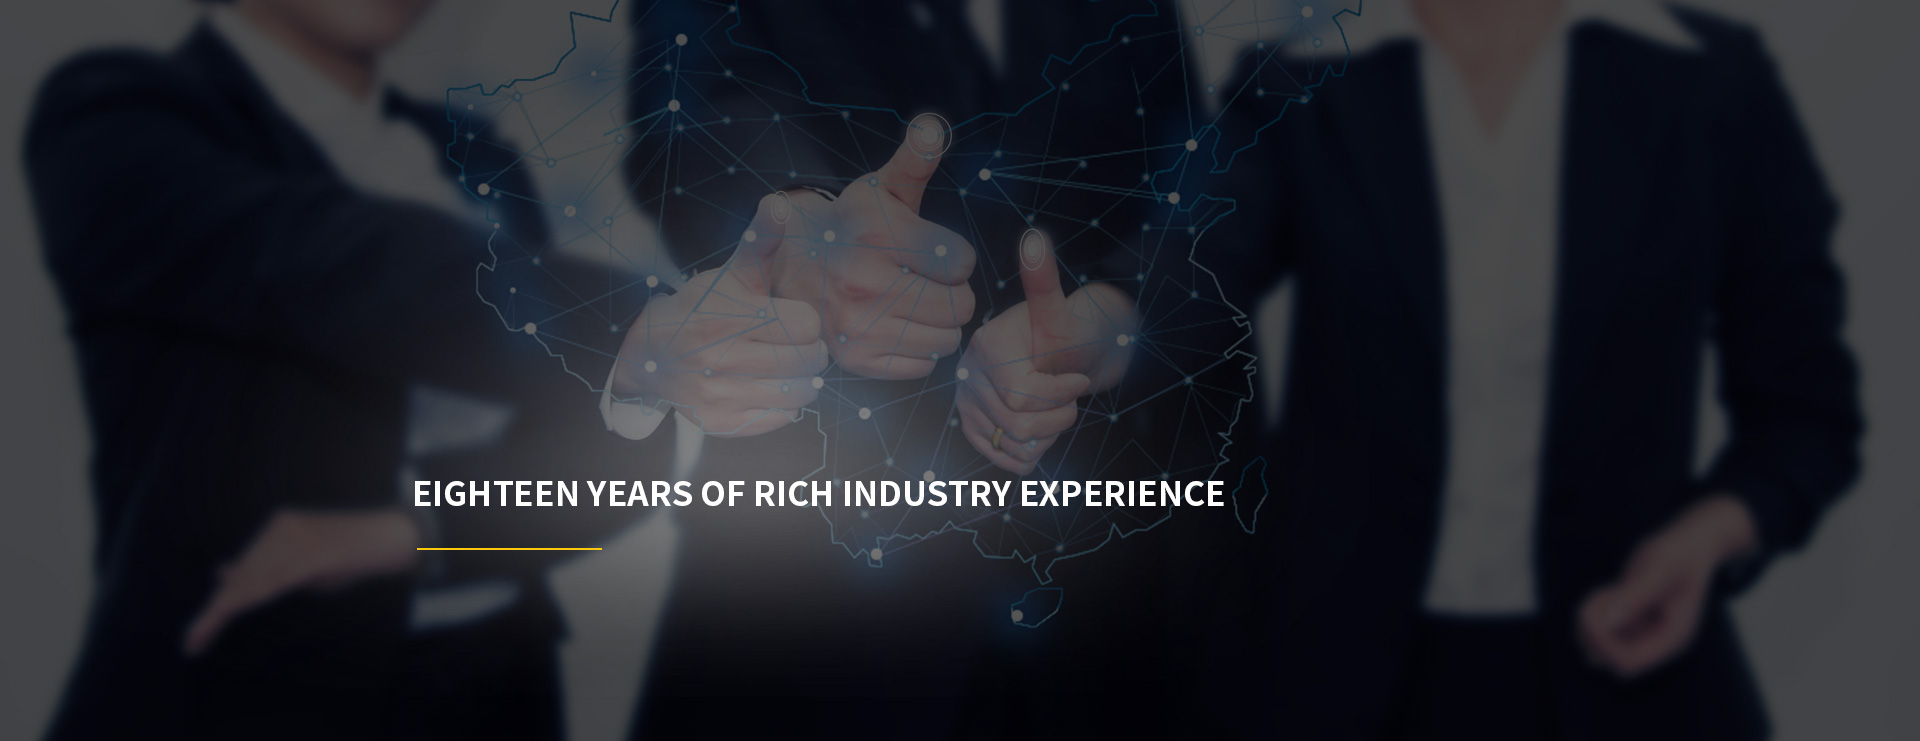 Eighteen years of rich industry